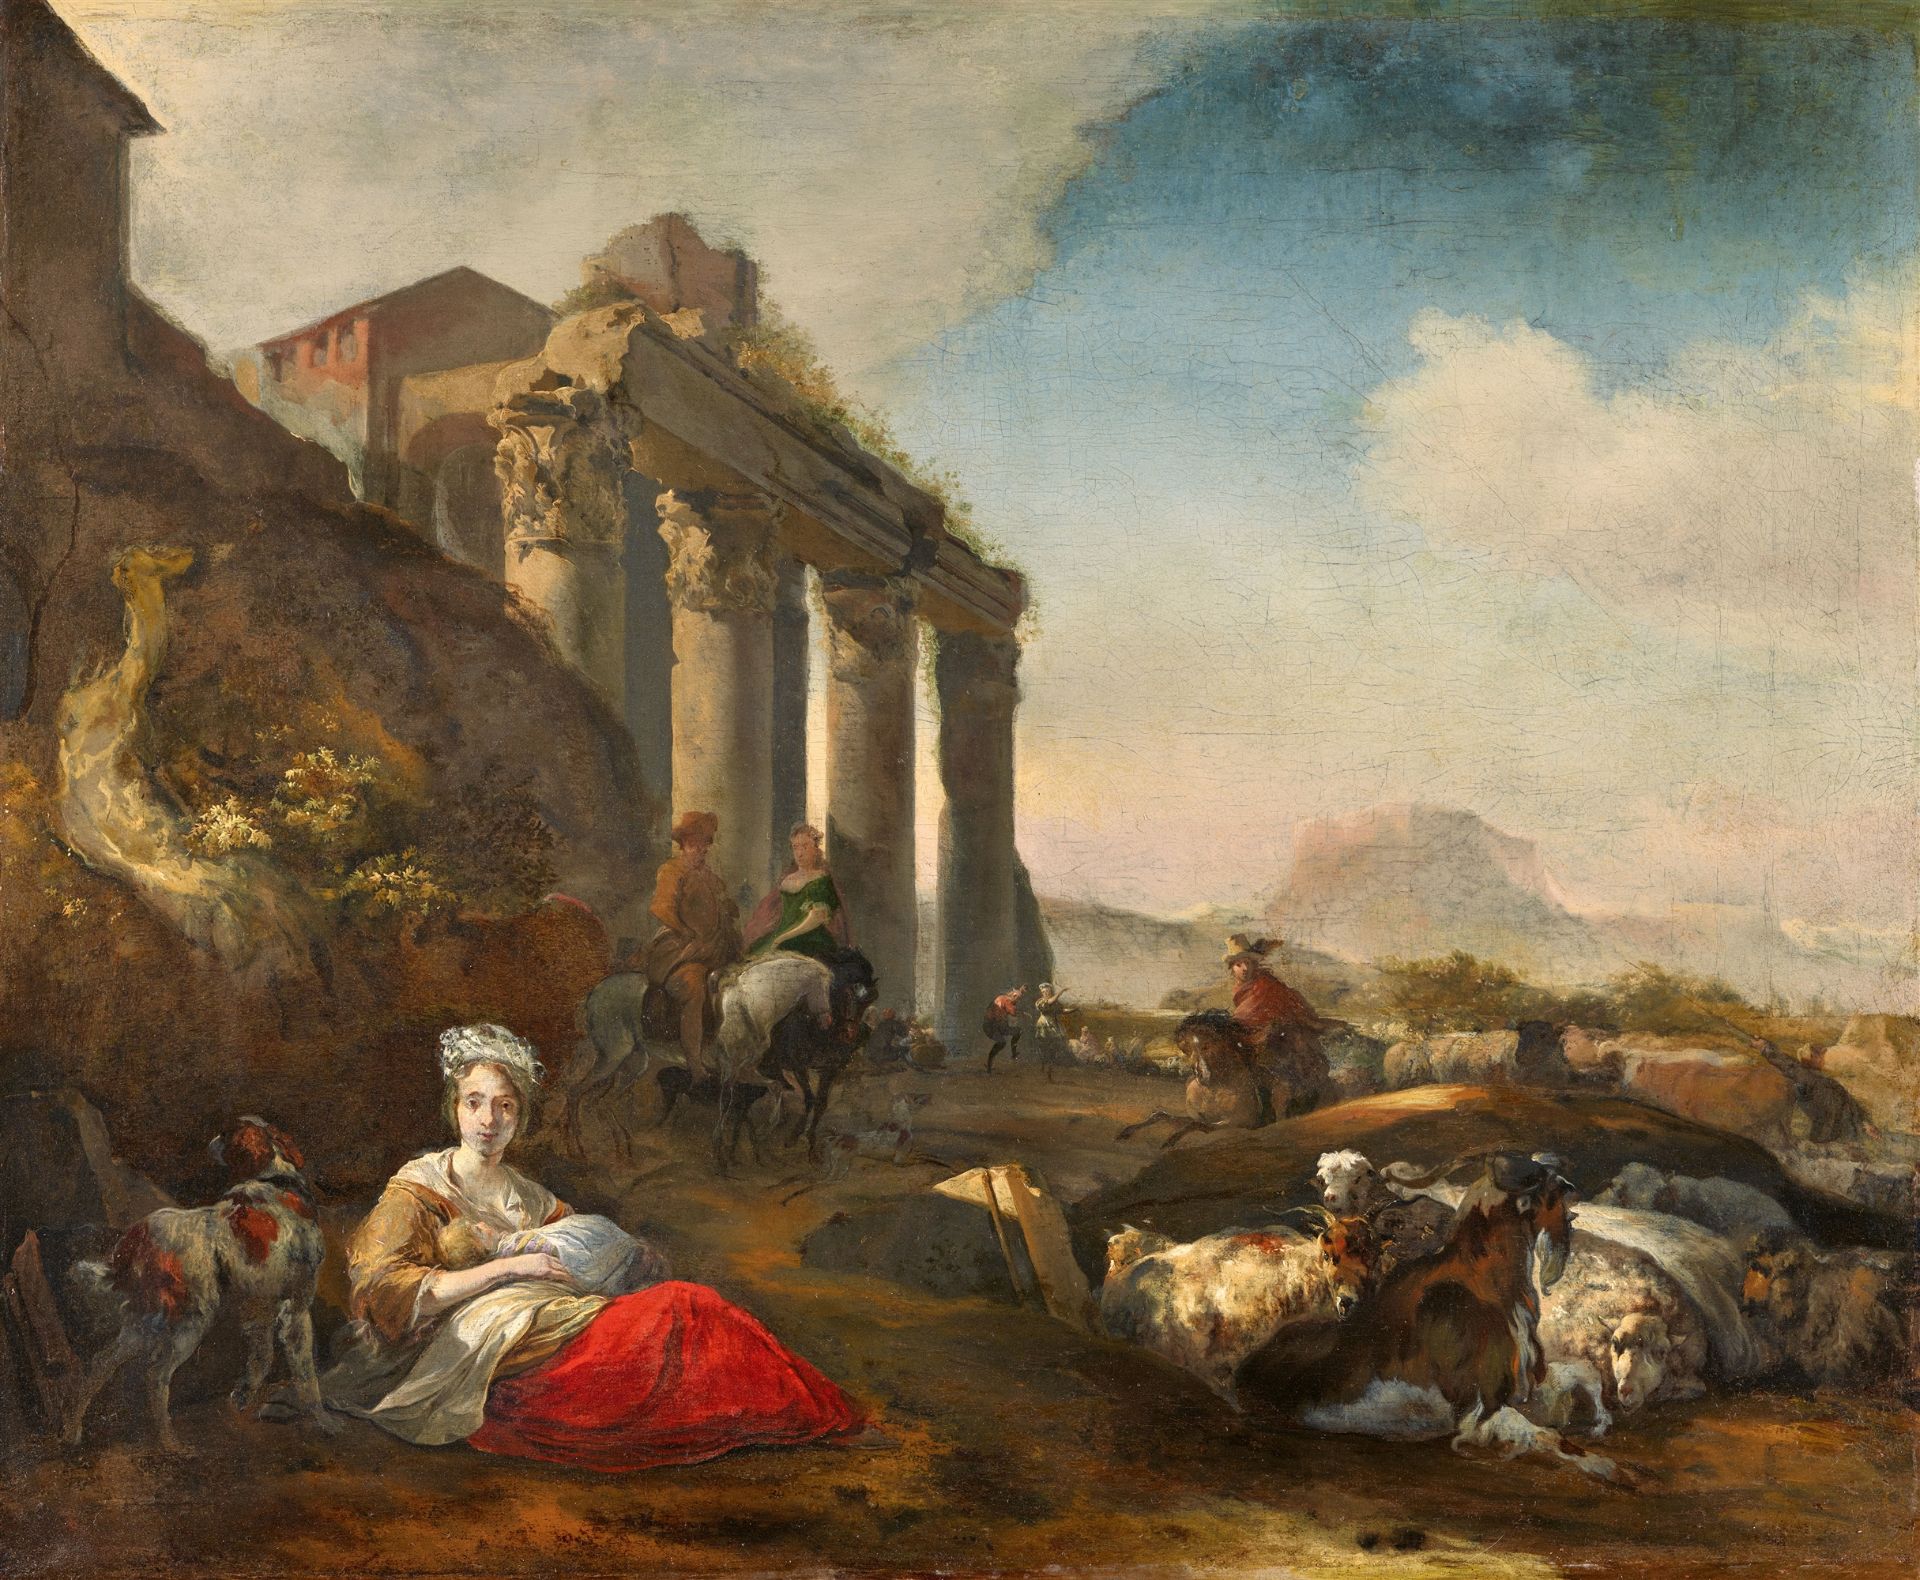 Jan Baptist Weenix, A Shepherd and his Flocks by Ancient Ruins